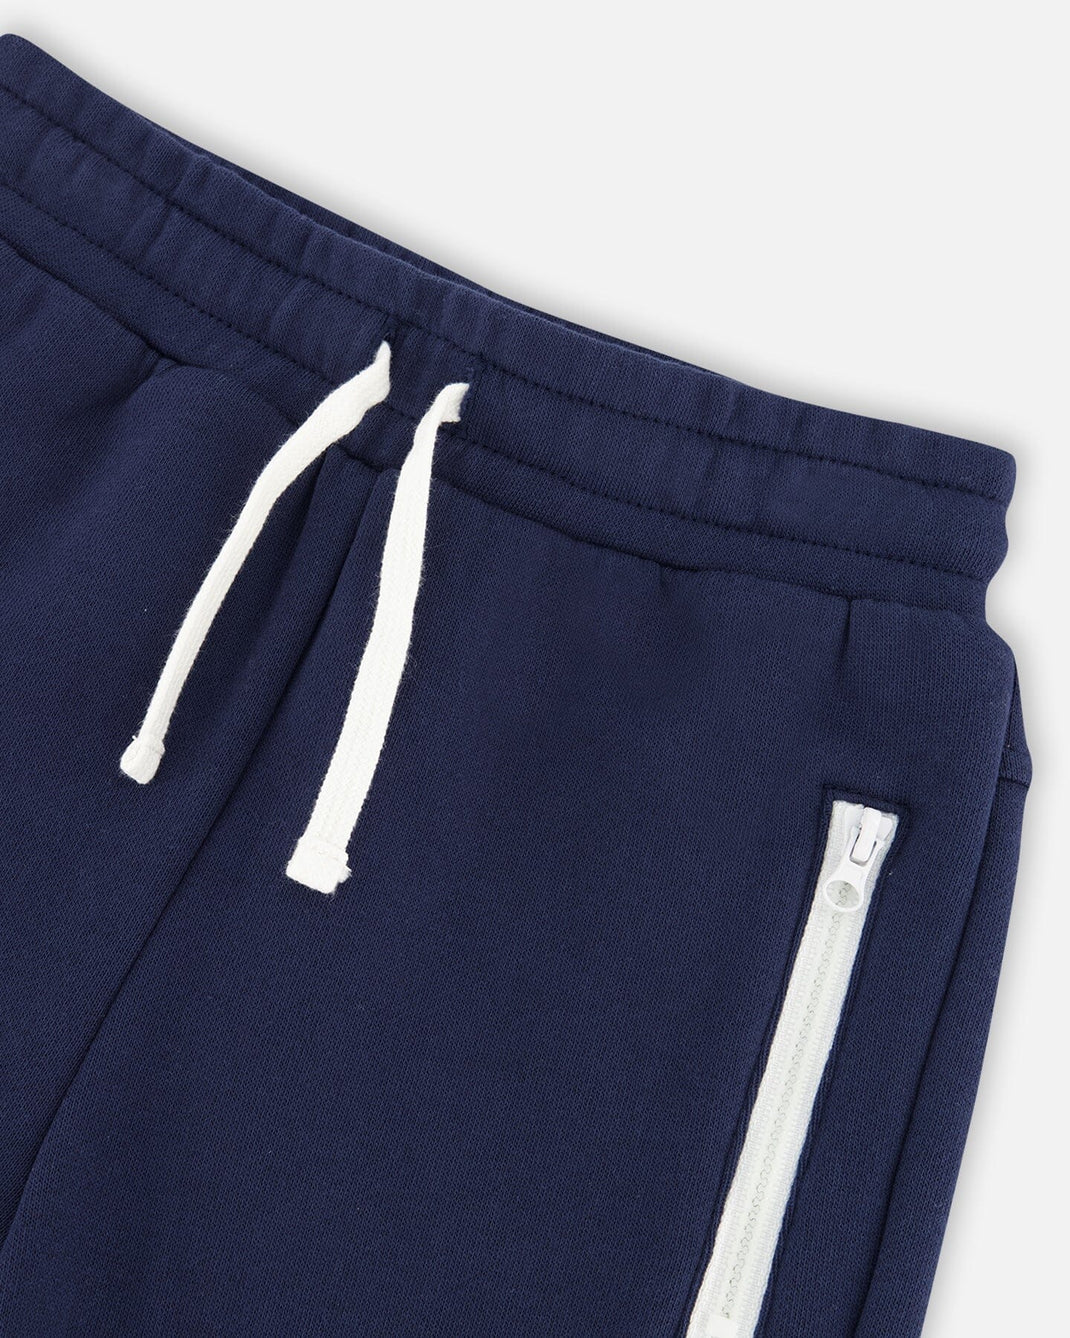 Fleece Sweatpants With Zipper Pockets Navy